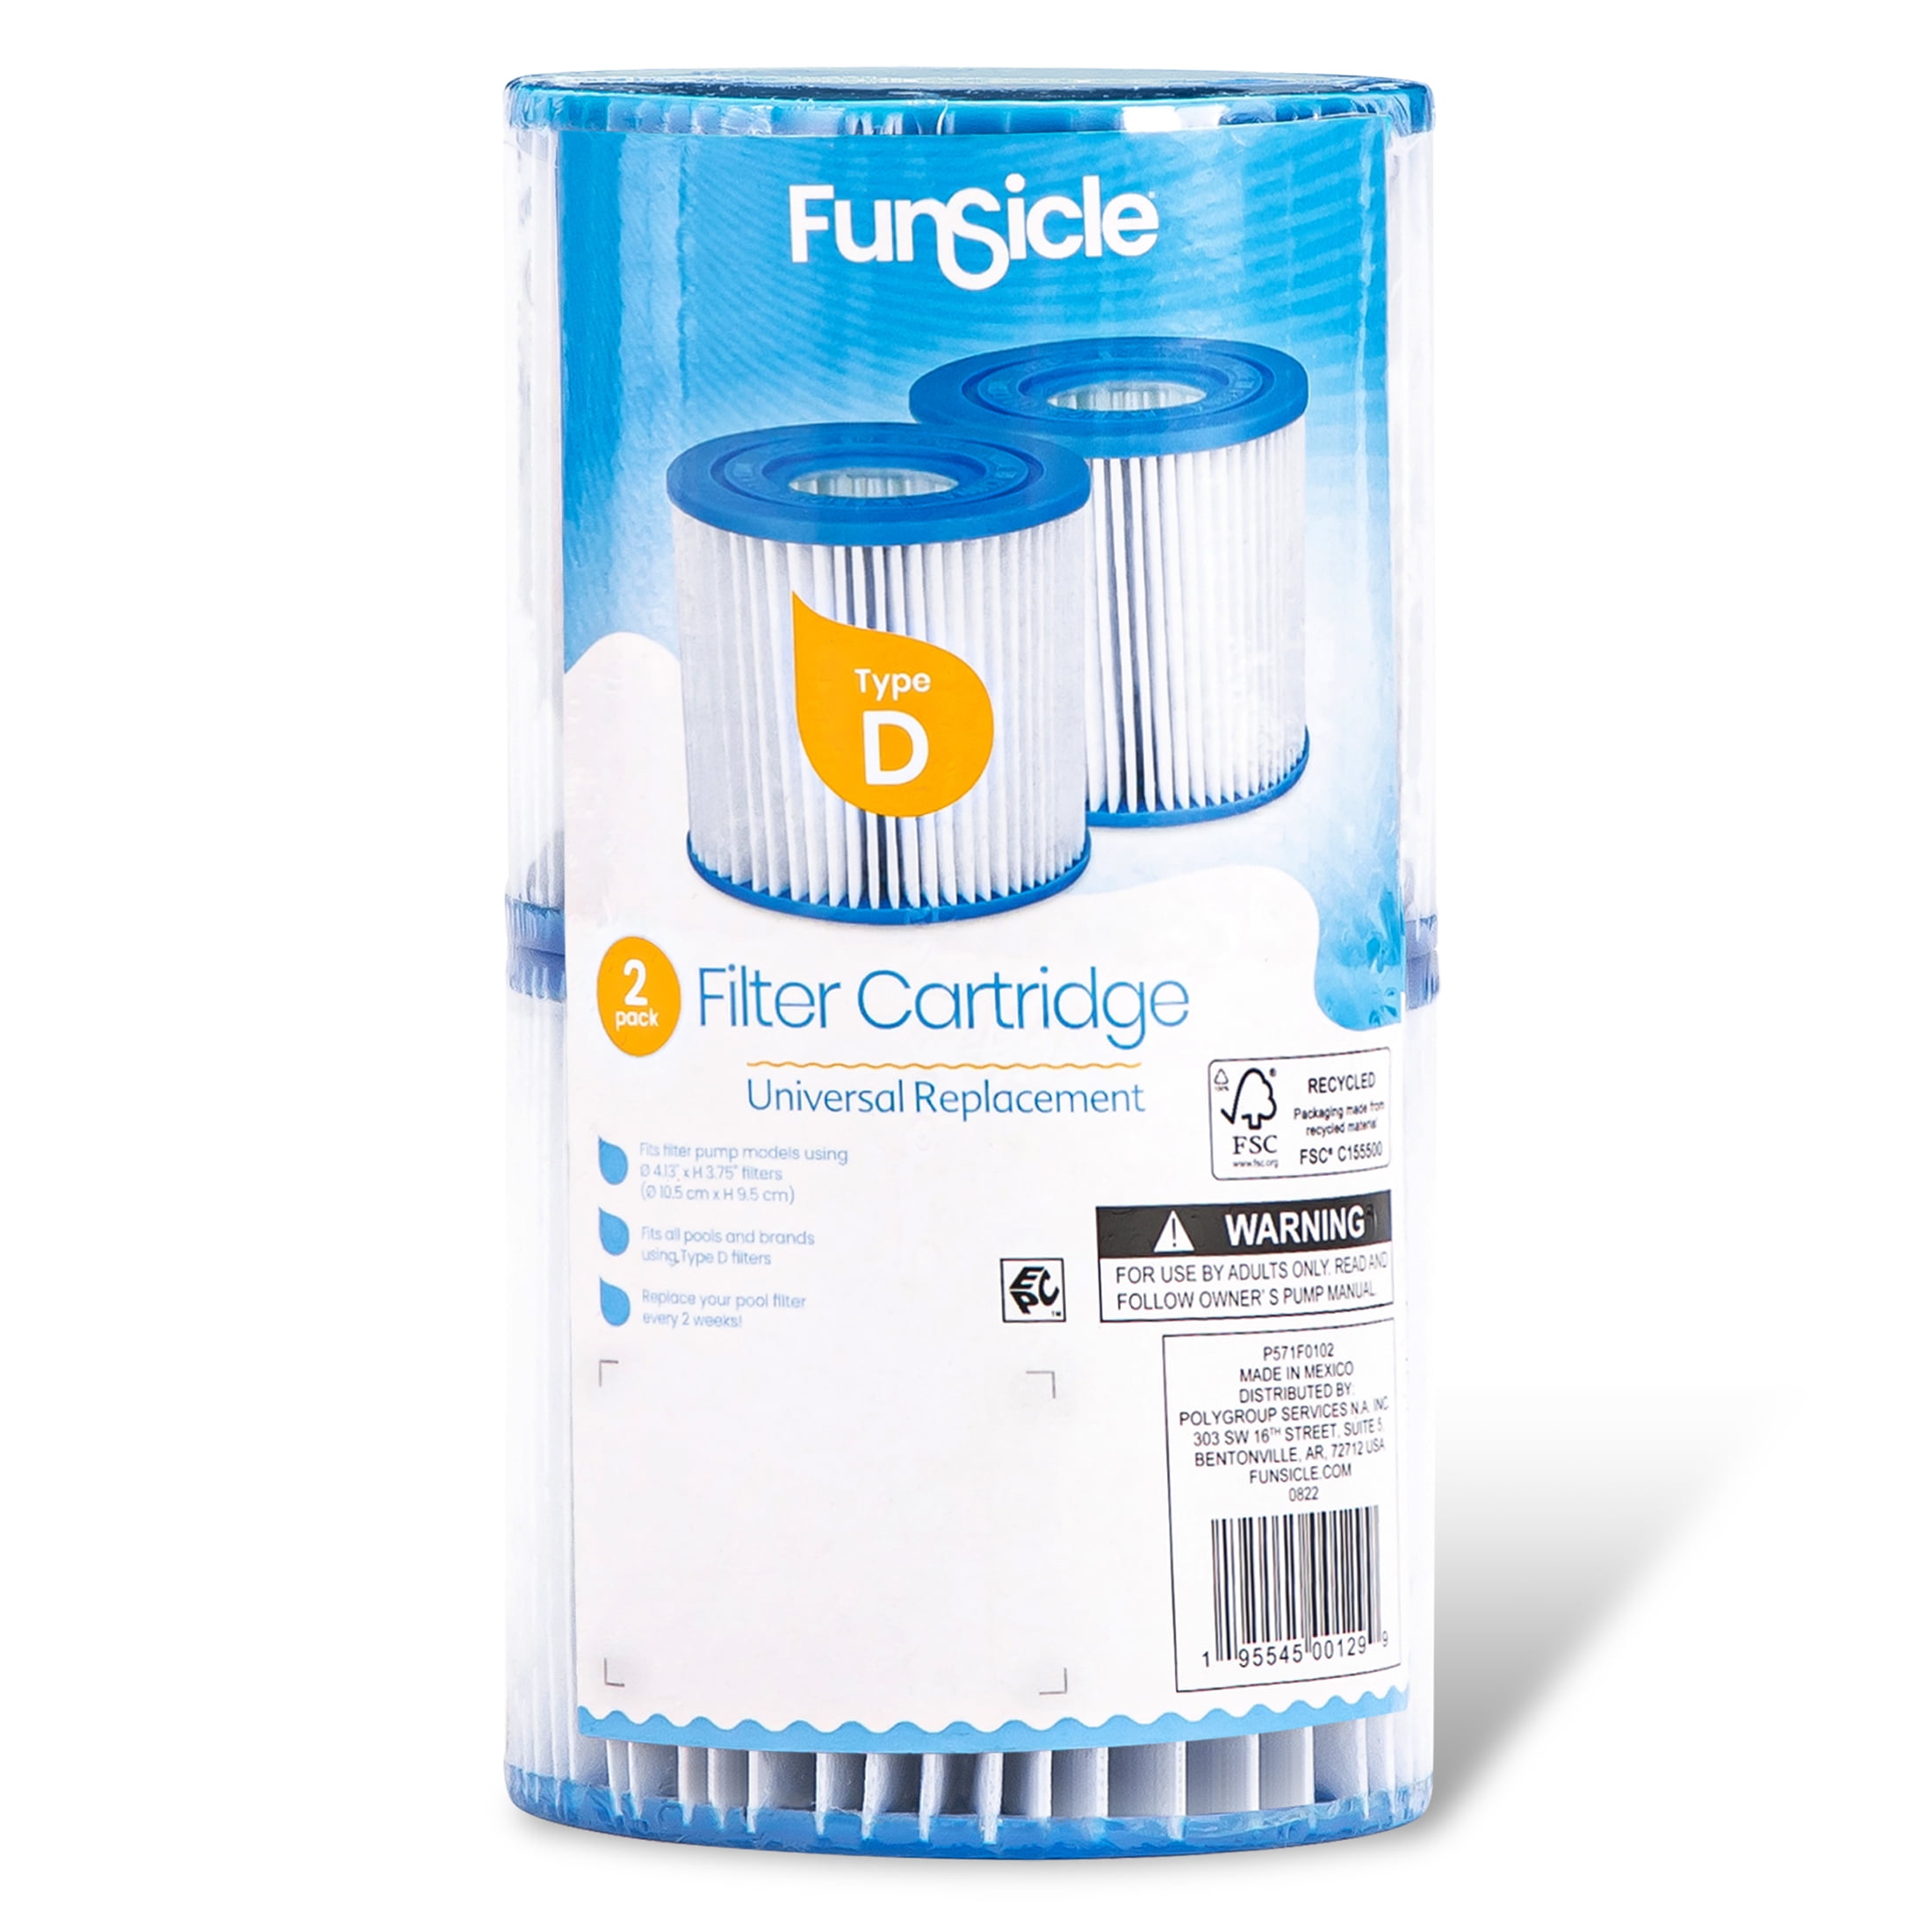 Outlook metriek vrijheid Funsicle Type D Filter Cartridges, 2-Pack,for adults - Walmart.com